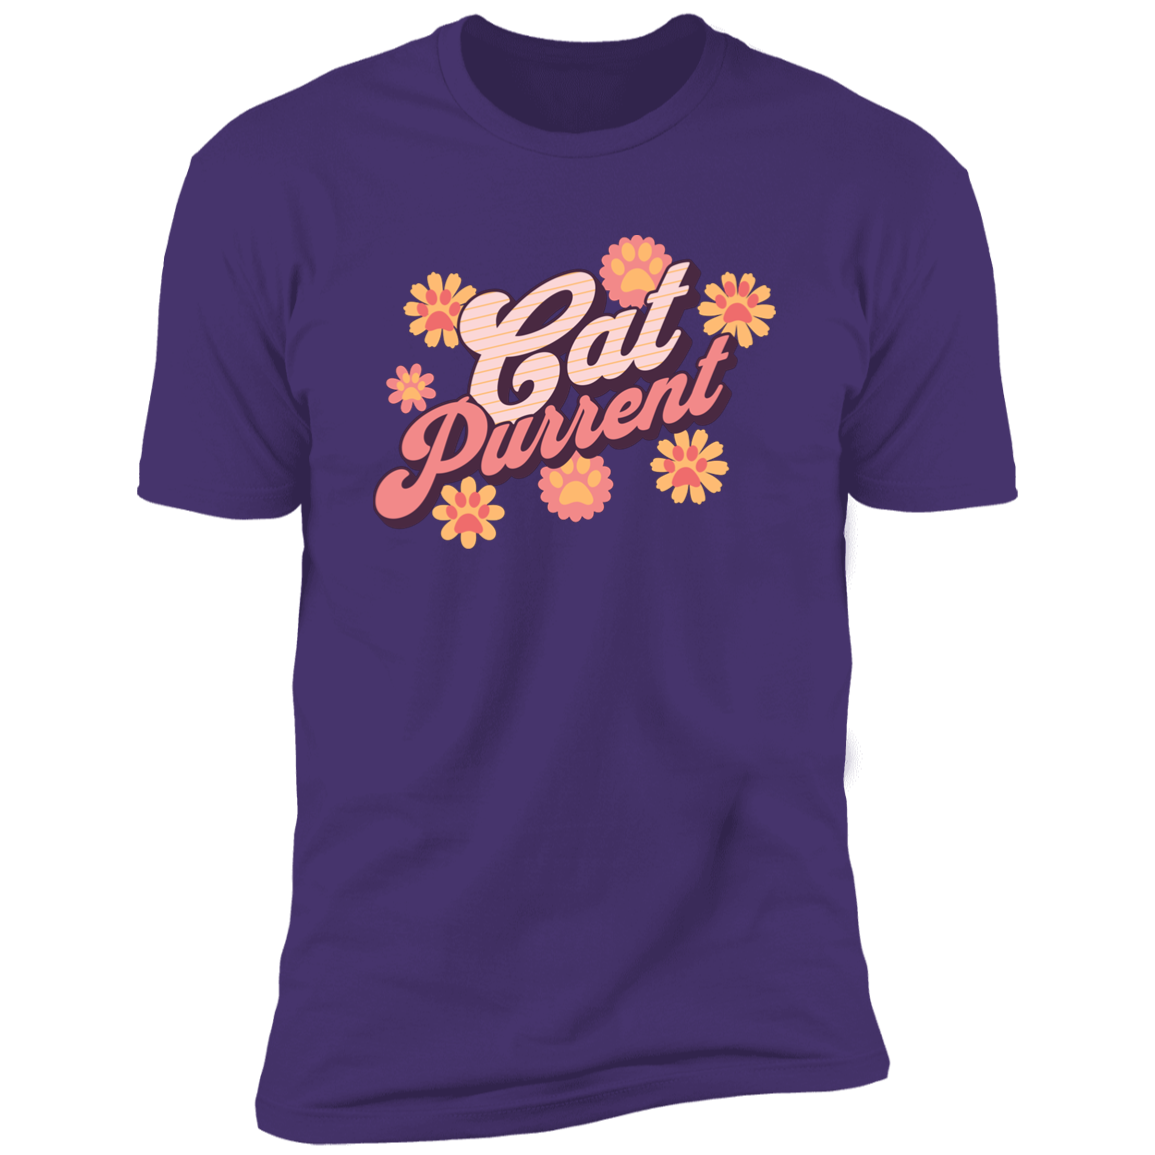 Cat Purrent Retro T-shirt, Cat Parent Shirt for humans, in purple rush